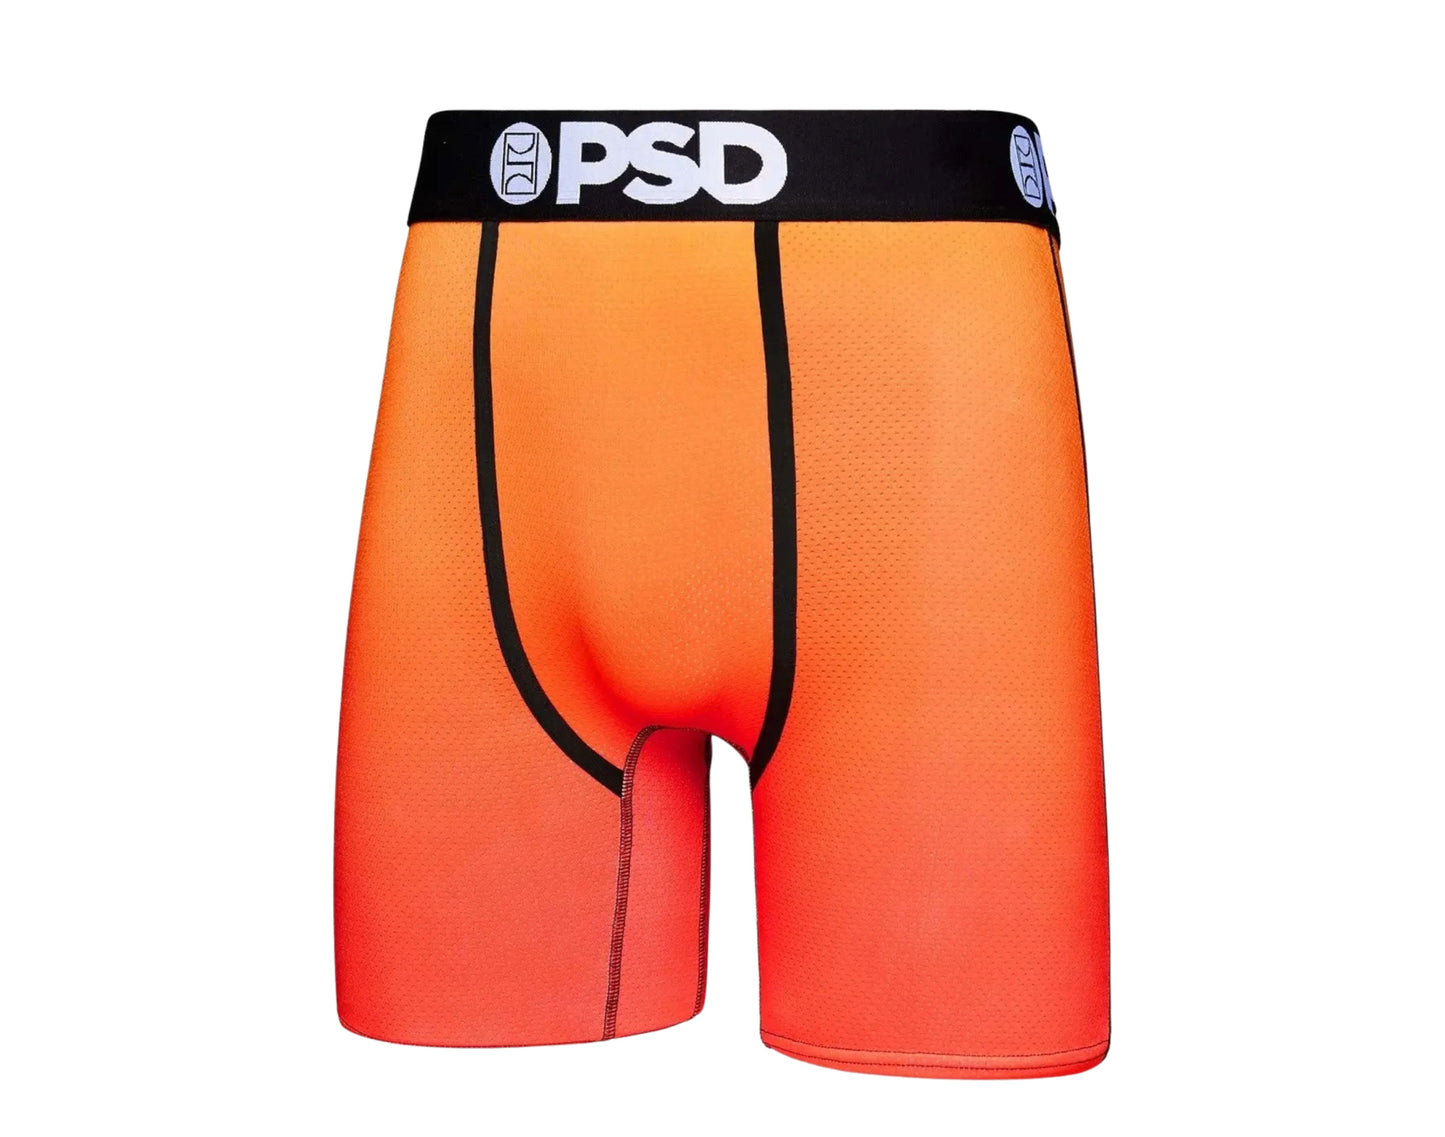 PSD Cool Mesh 3-Pack - Gradient Boxer Briefs Men's Underwear